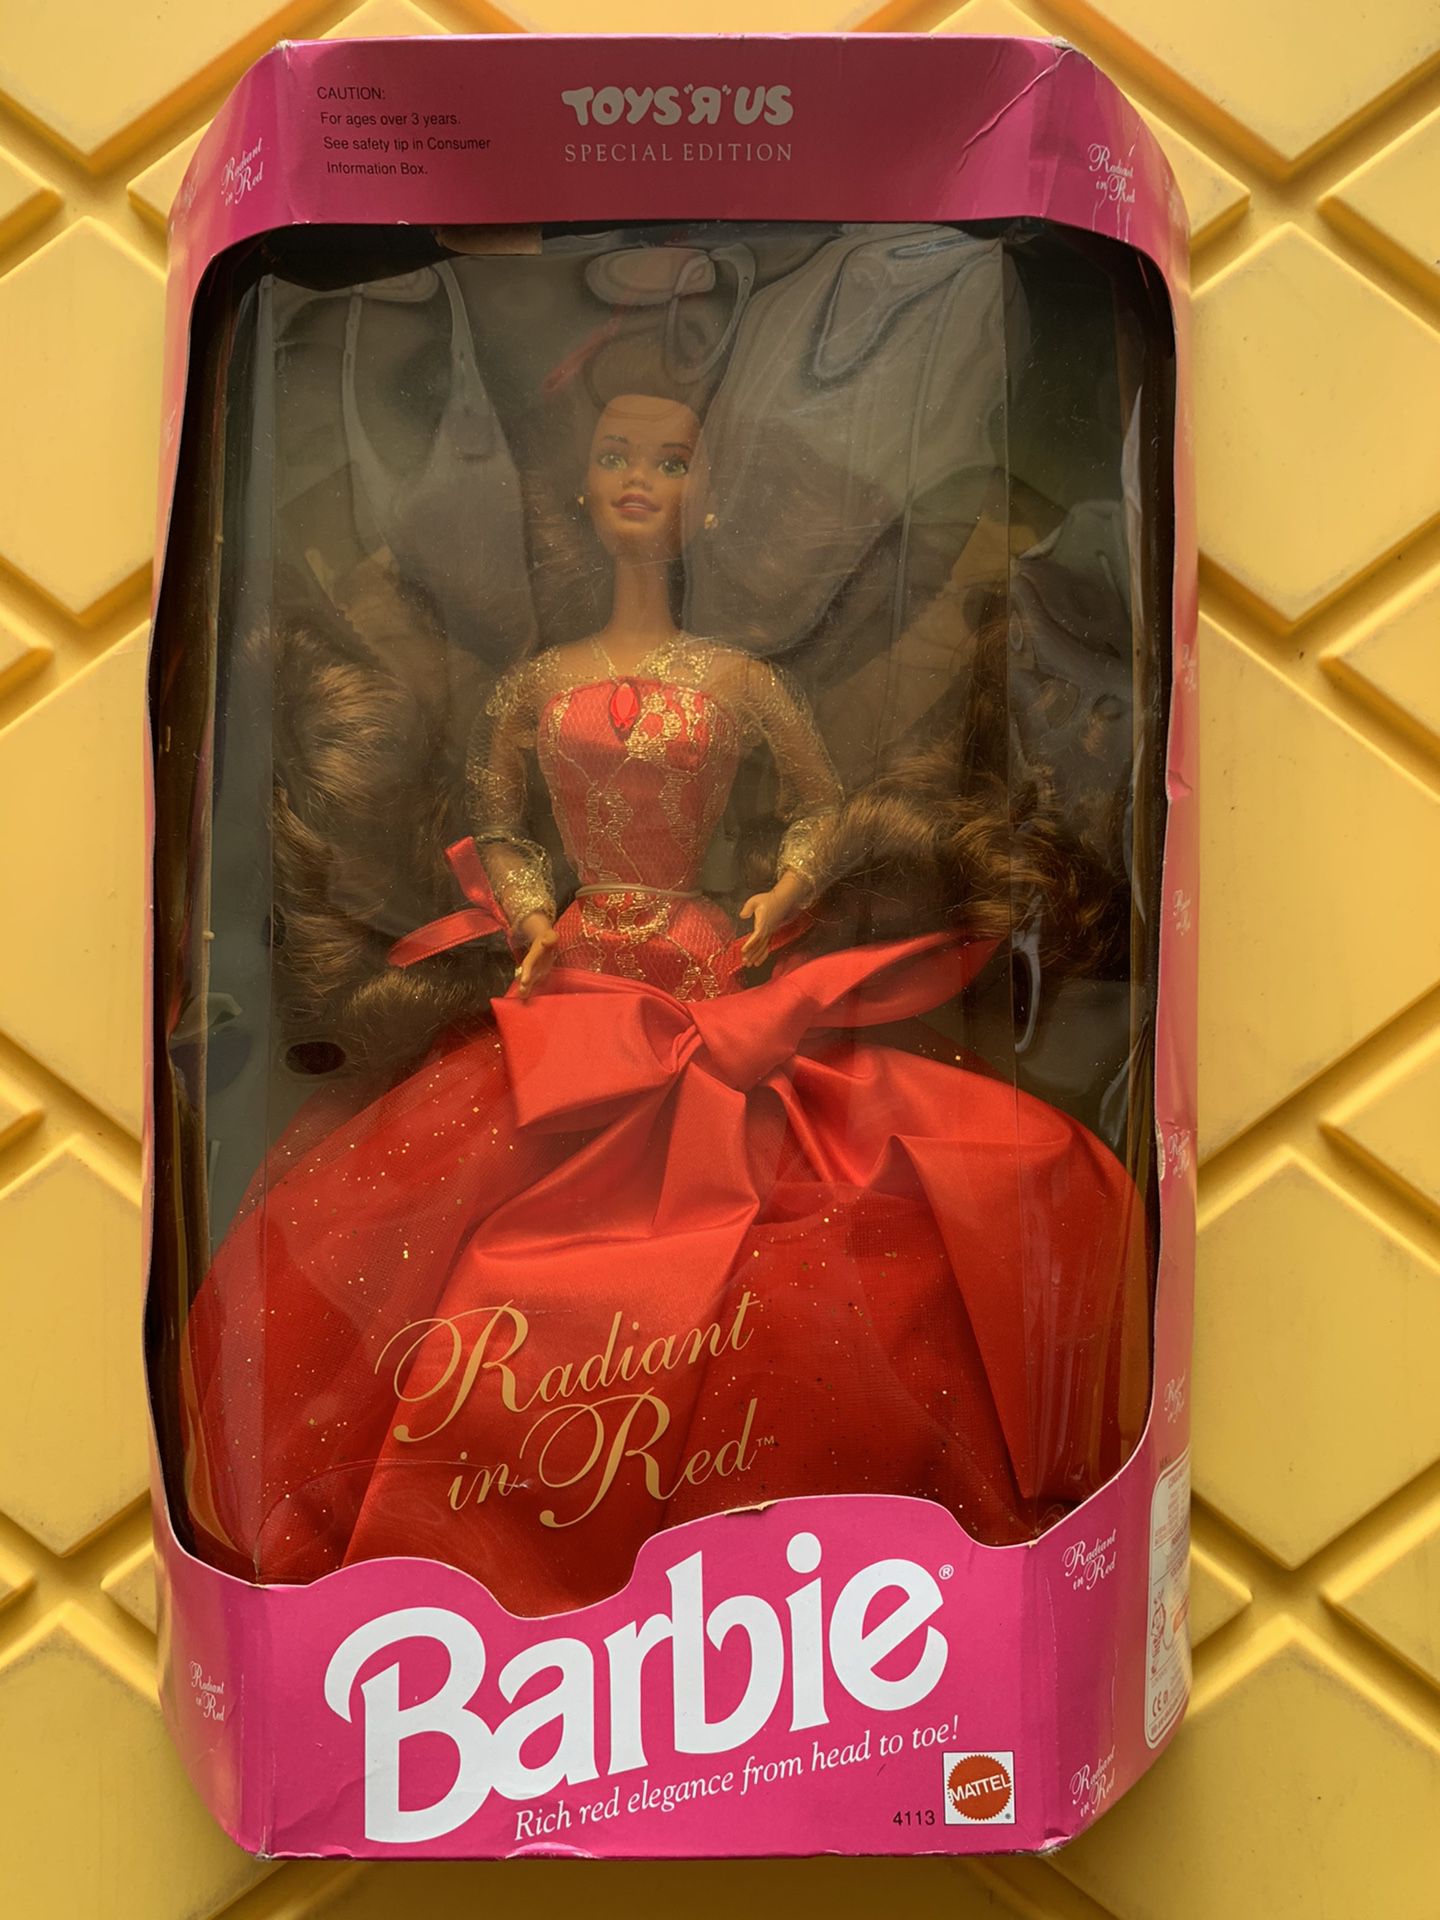 Vintage Radiant and red Barbie